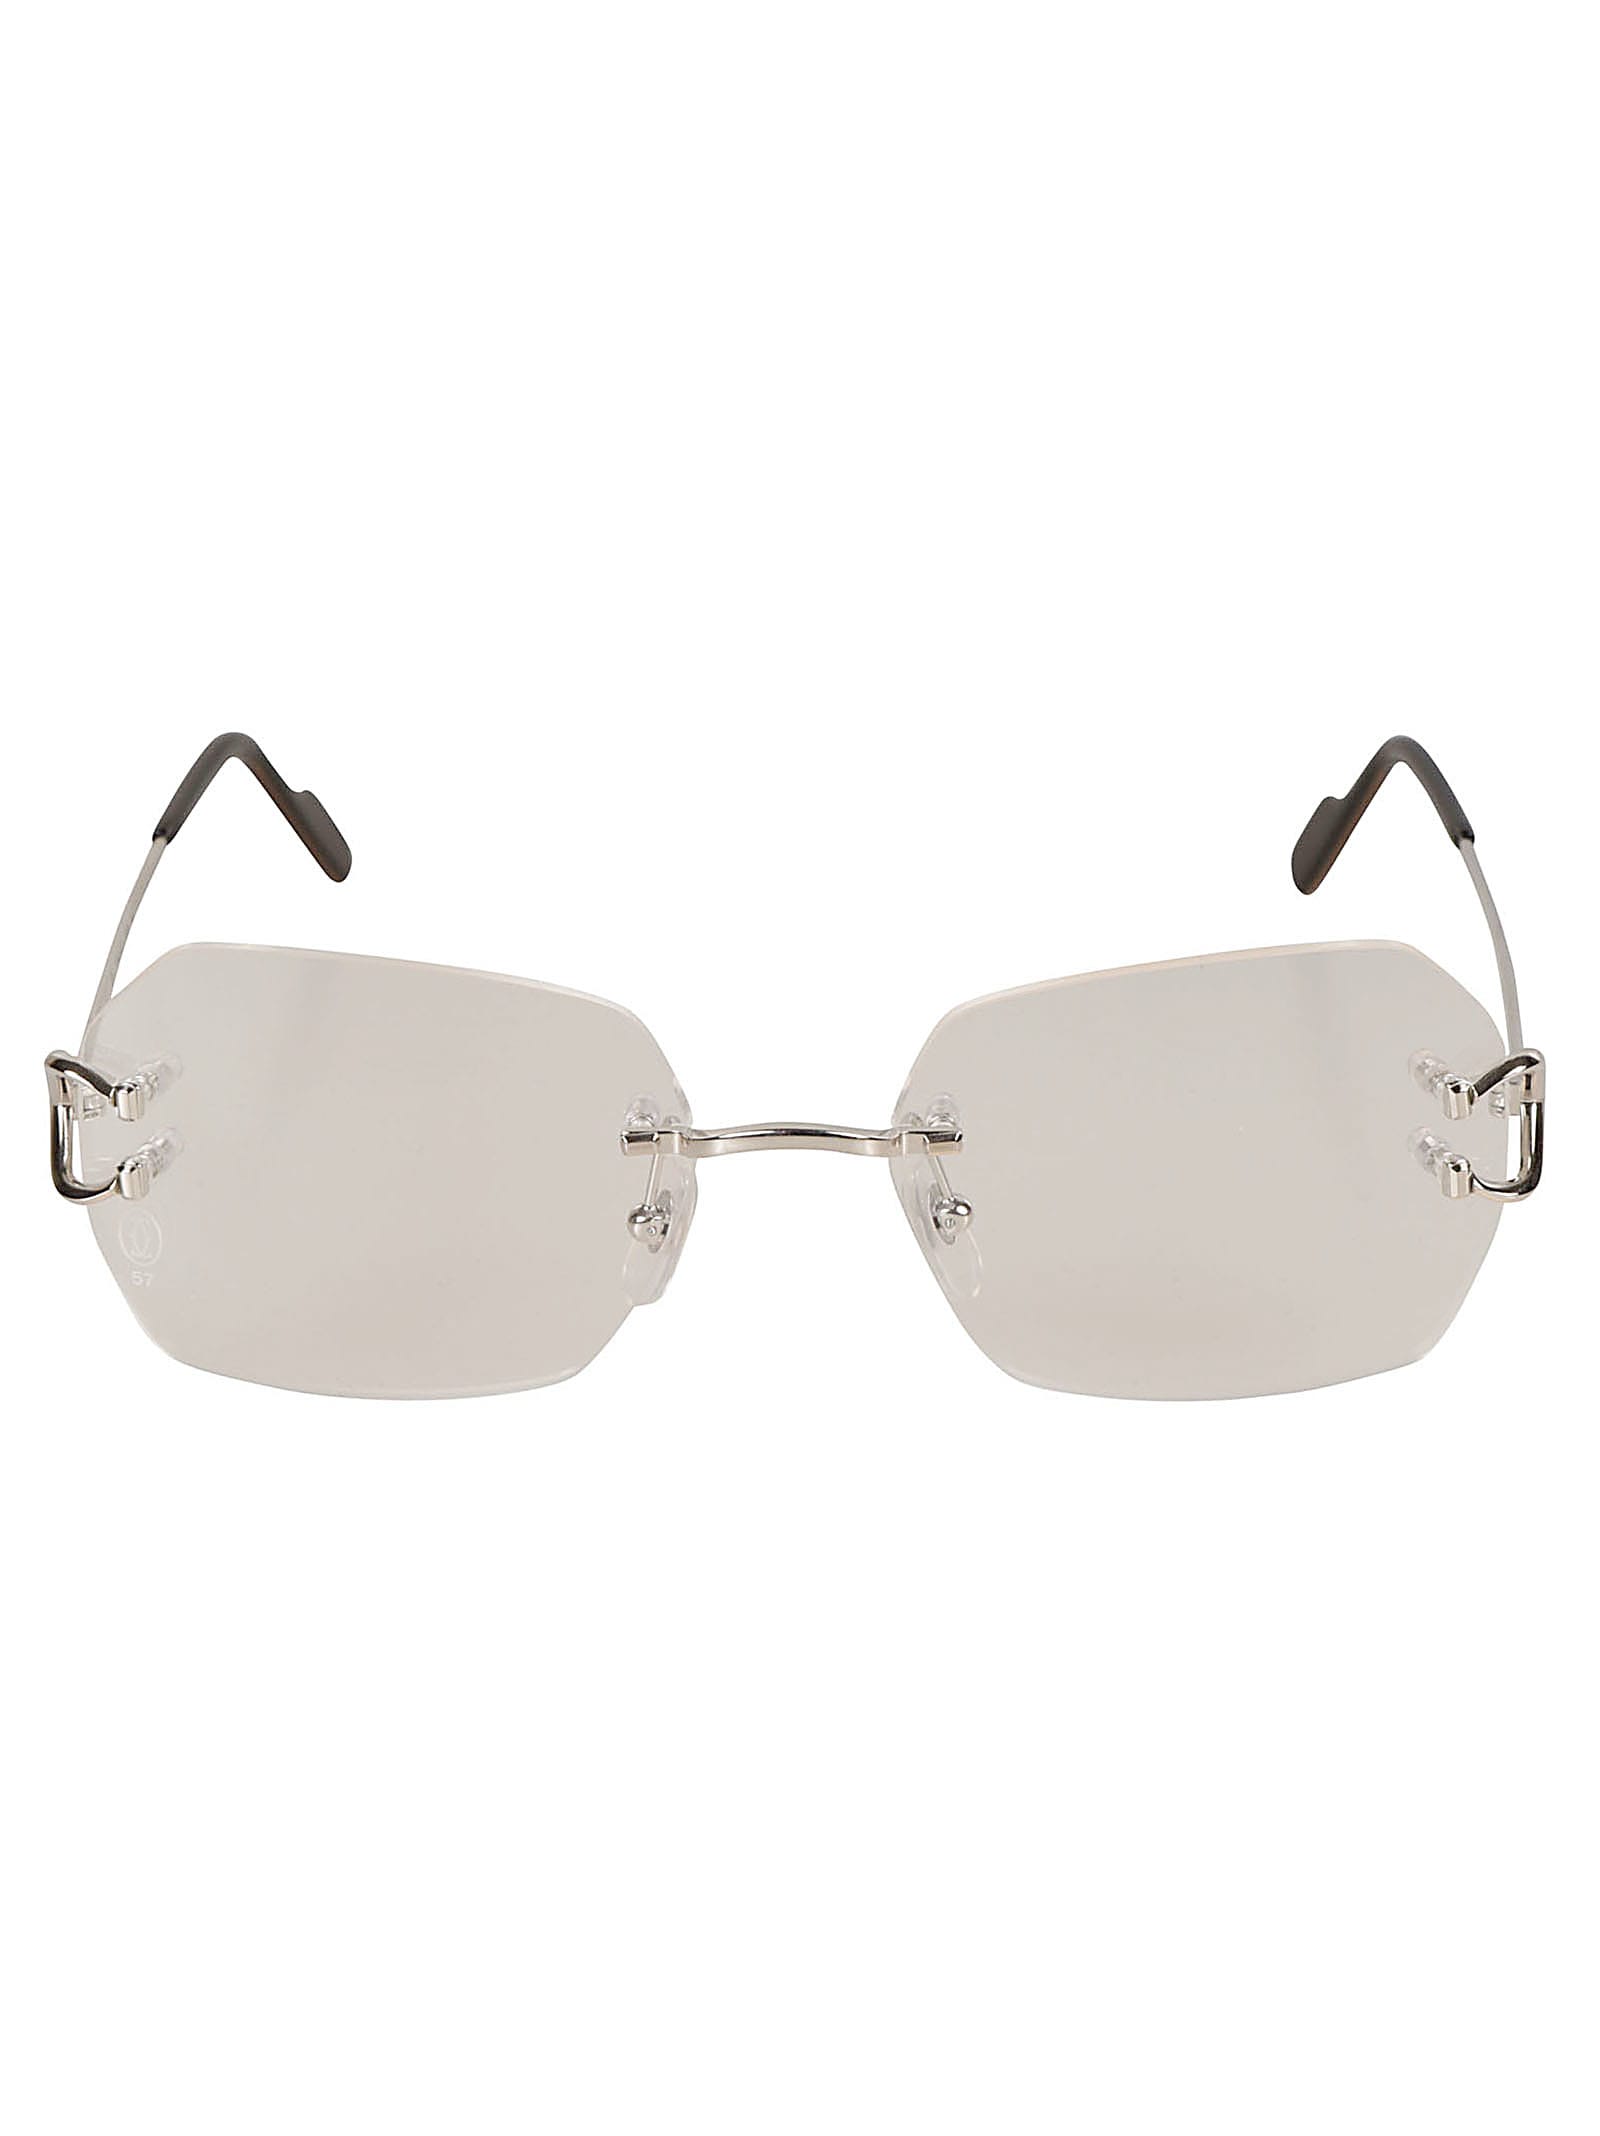 Cartier Square Frame Glasses In Silver